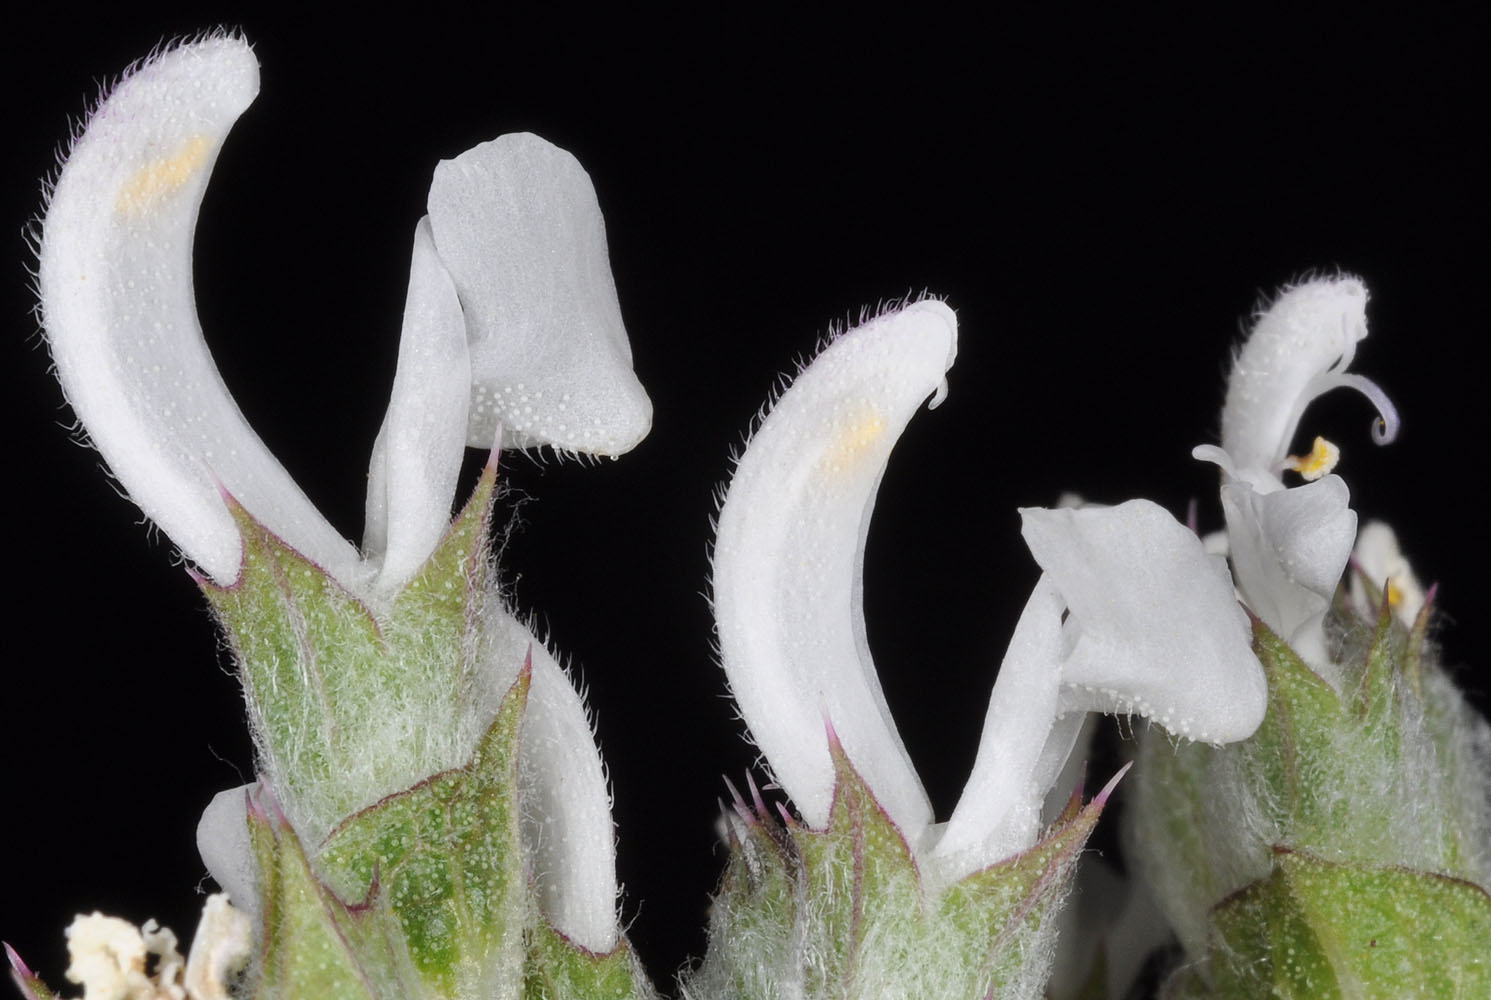 Flora of Eastern Washington Image: Salvia aethiopsis